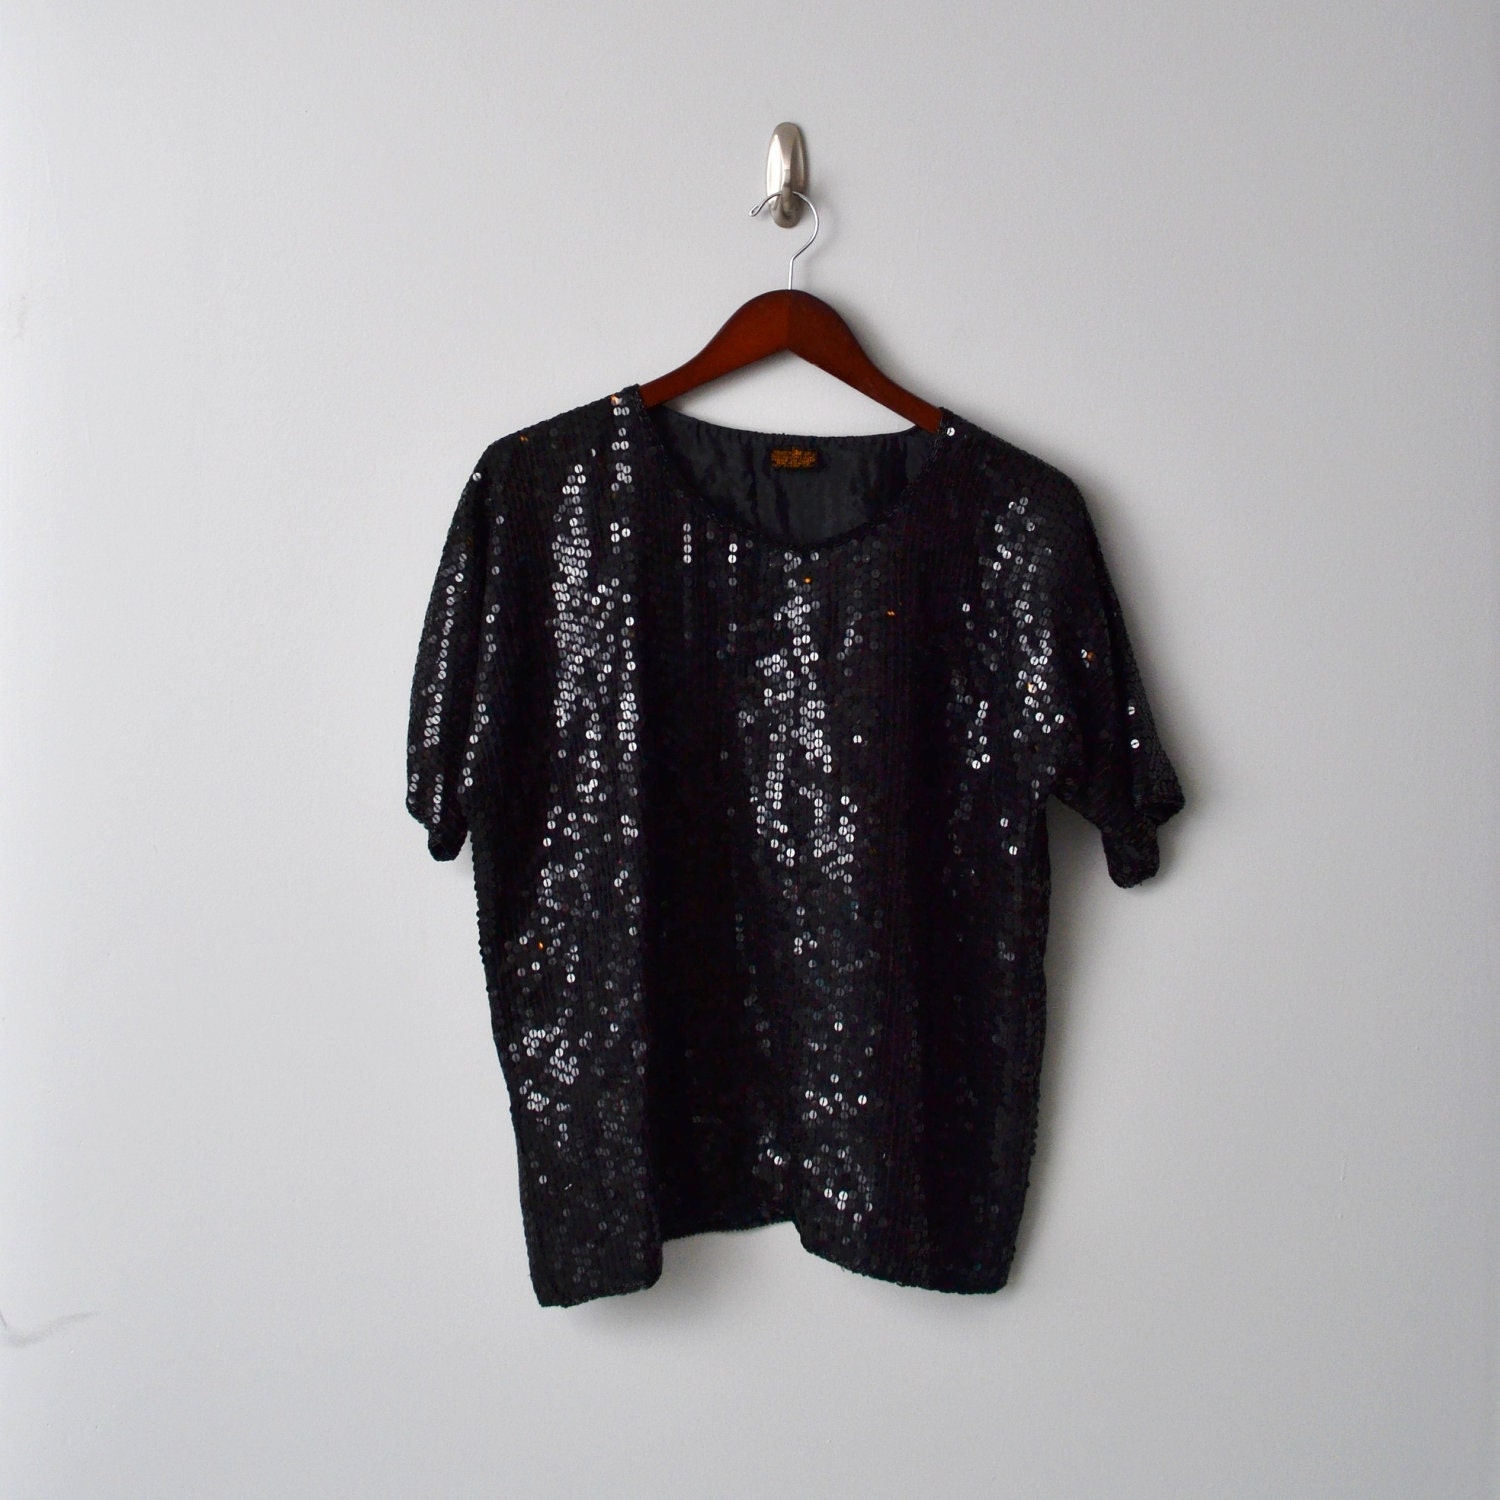 Vintage Black silk sequin TOP size Large